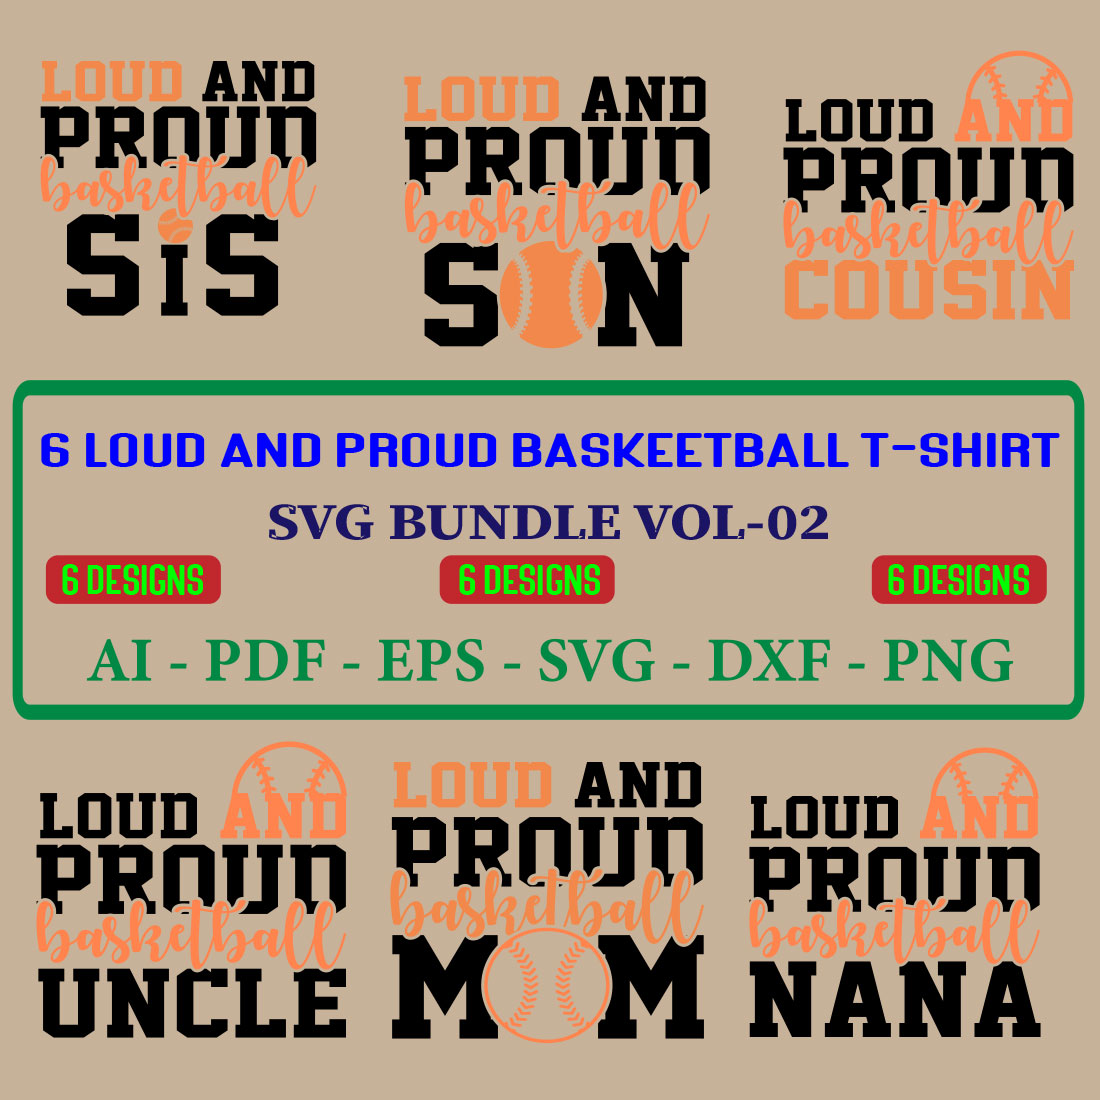 6 Loud And Proud Baskeetball T-shirt SVG Bundle Vol-02 cover image.